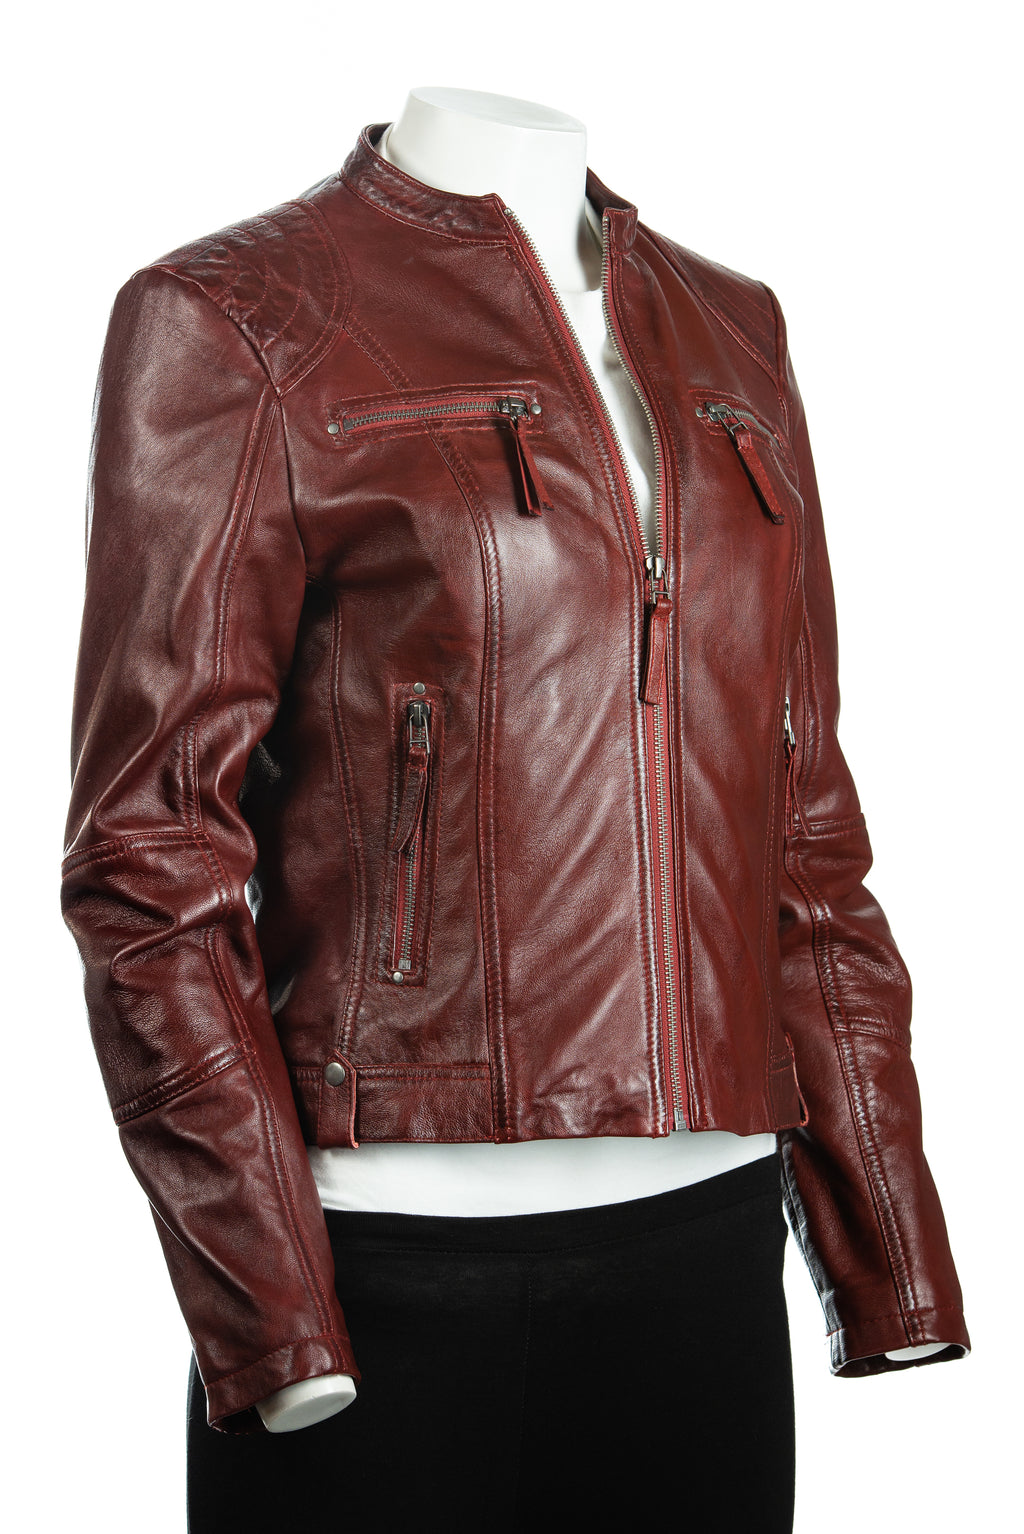 Ladies Burgundy Biker Style Leather Jacket: Greta